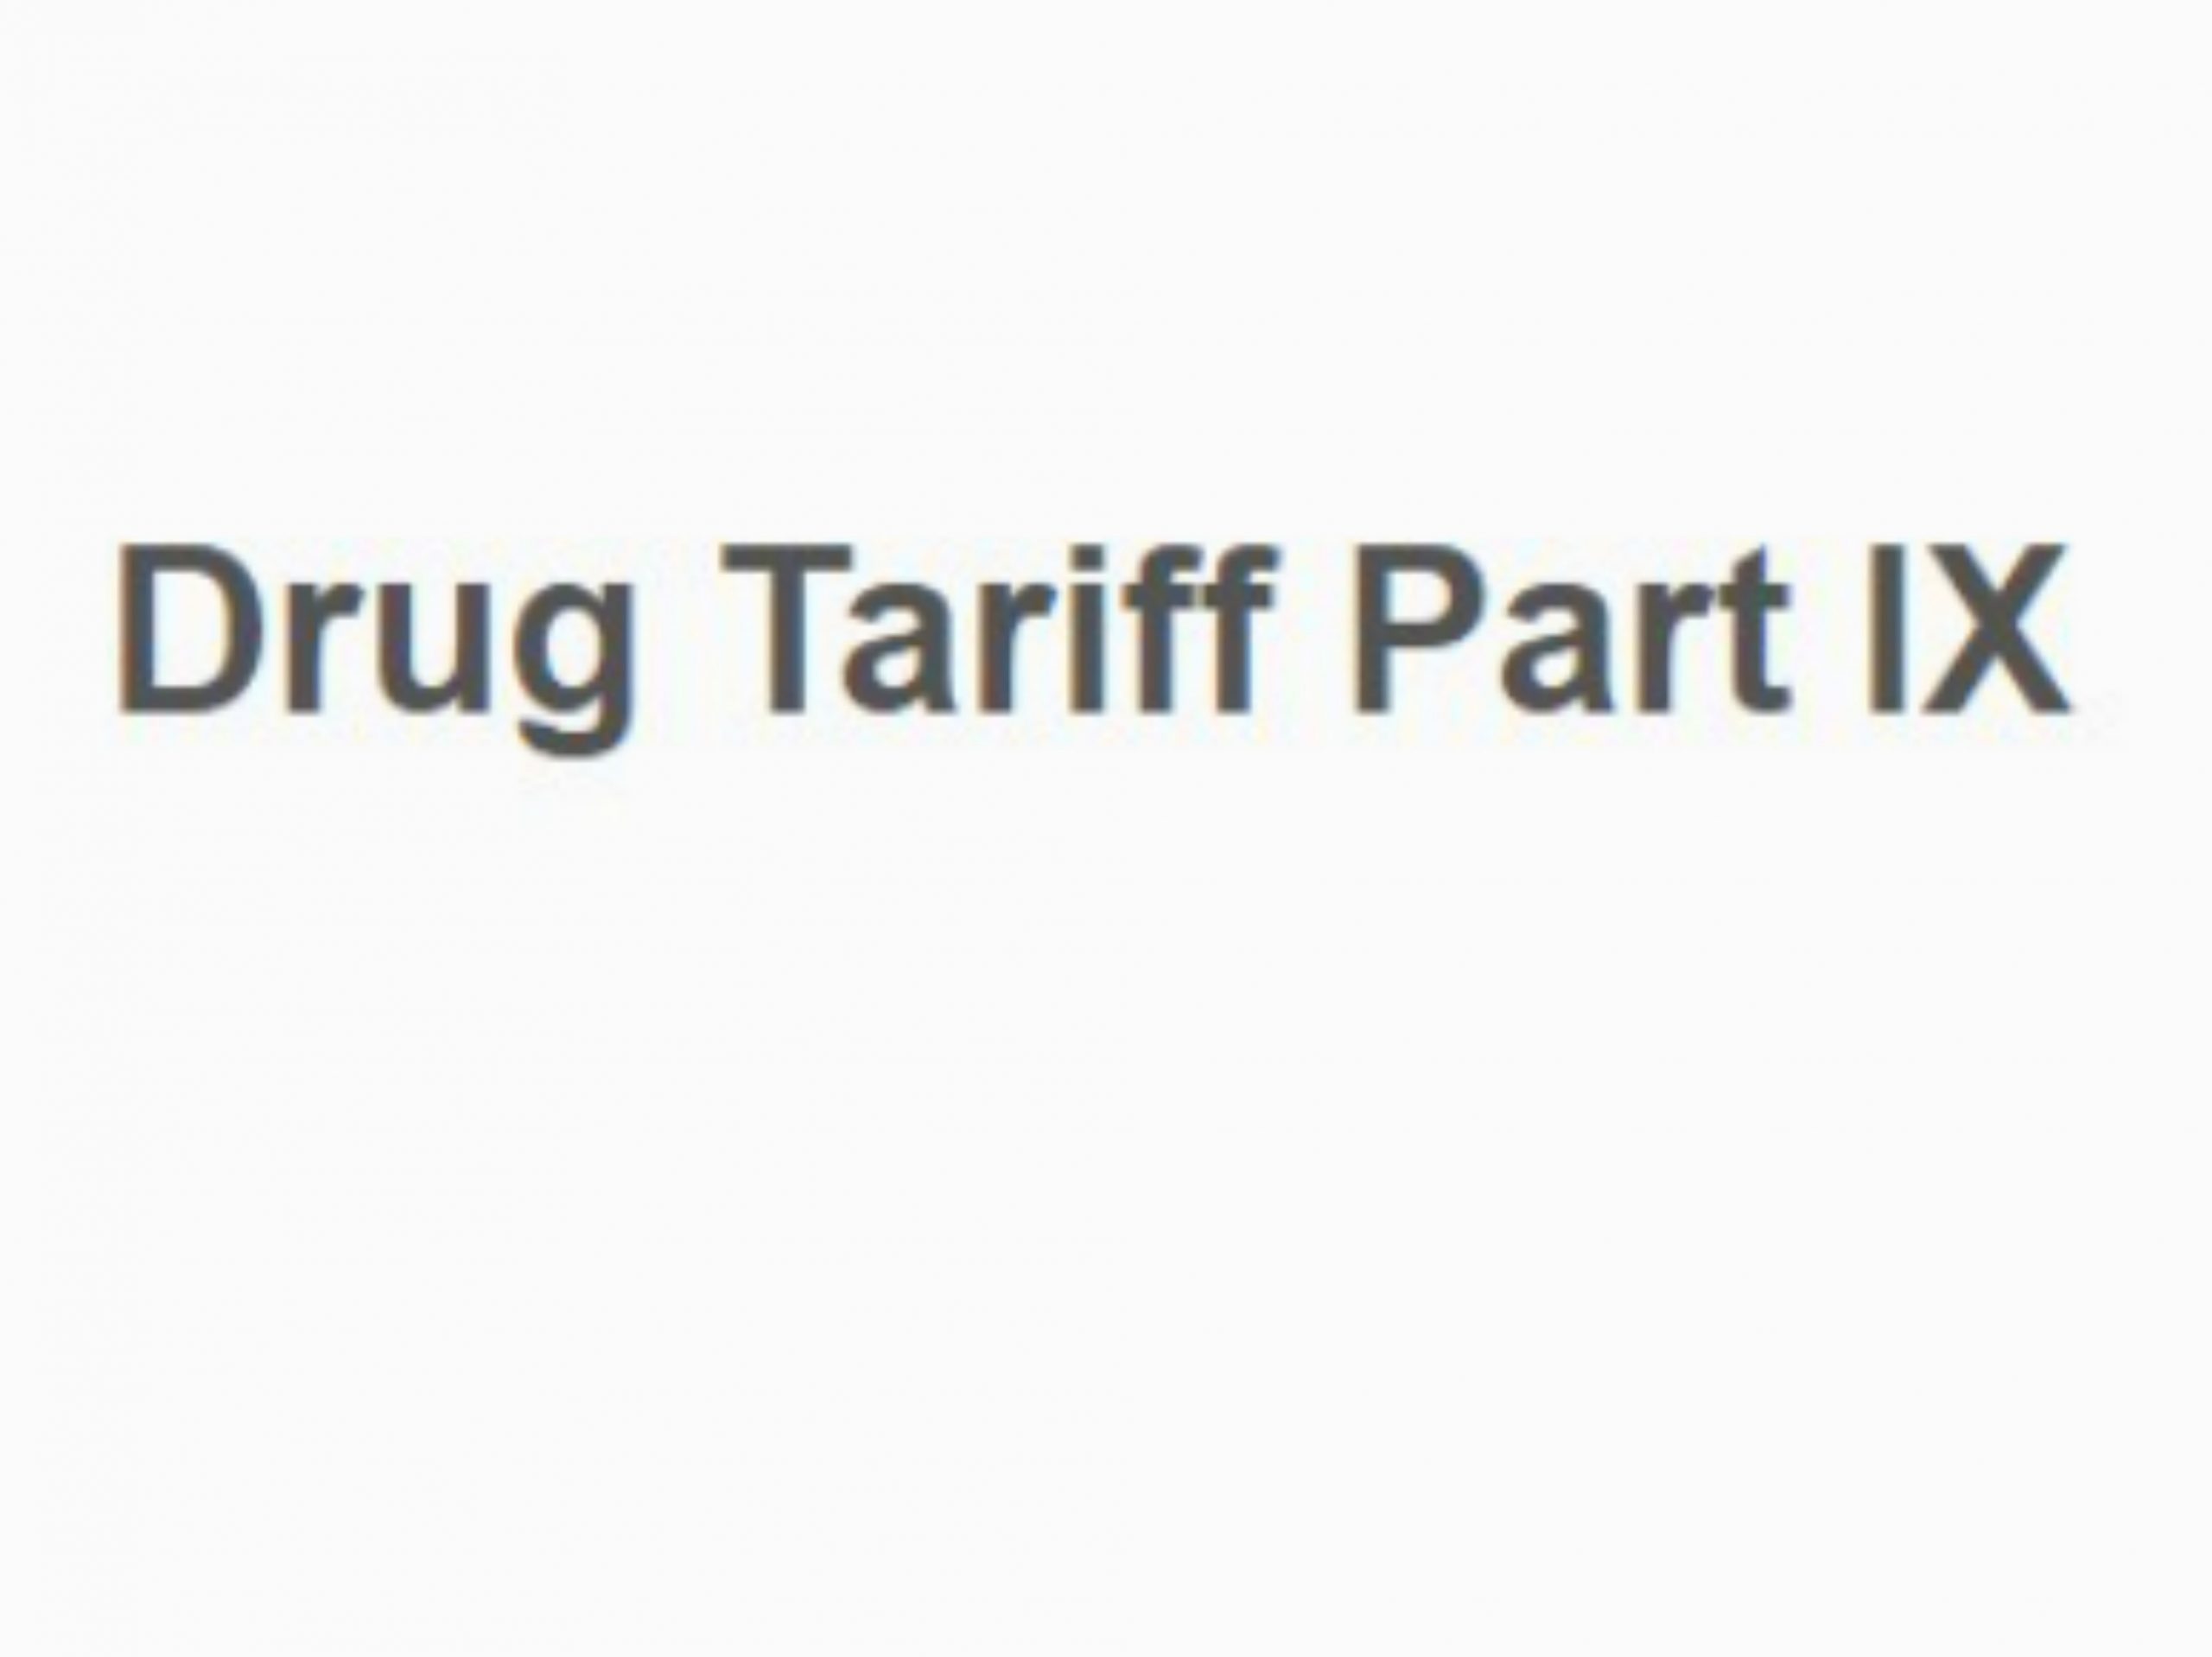 Part IX Industry Drug Tariff Committee Mandate